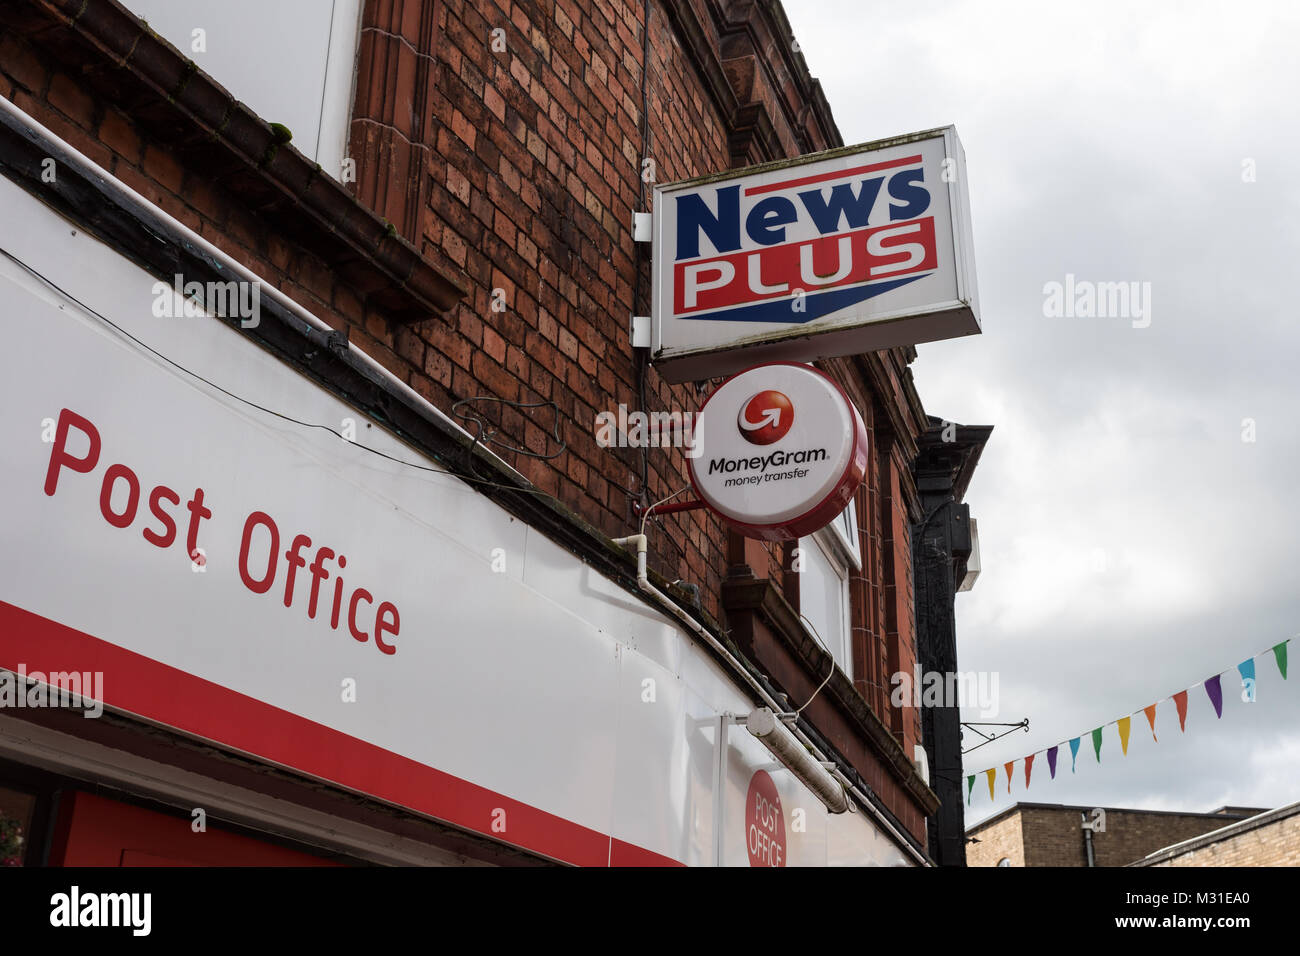 Post Office, News Plus and MoneyGram sign, Northwich, Cheshire, UK Stock Photo